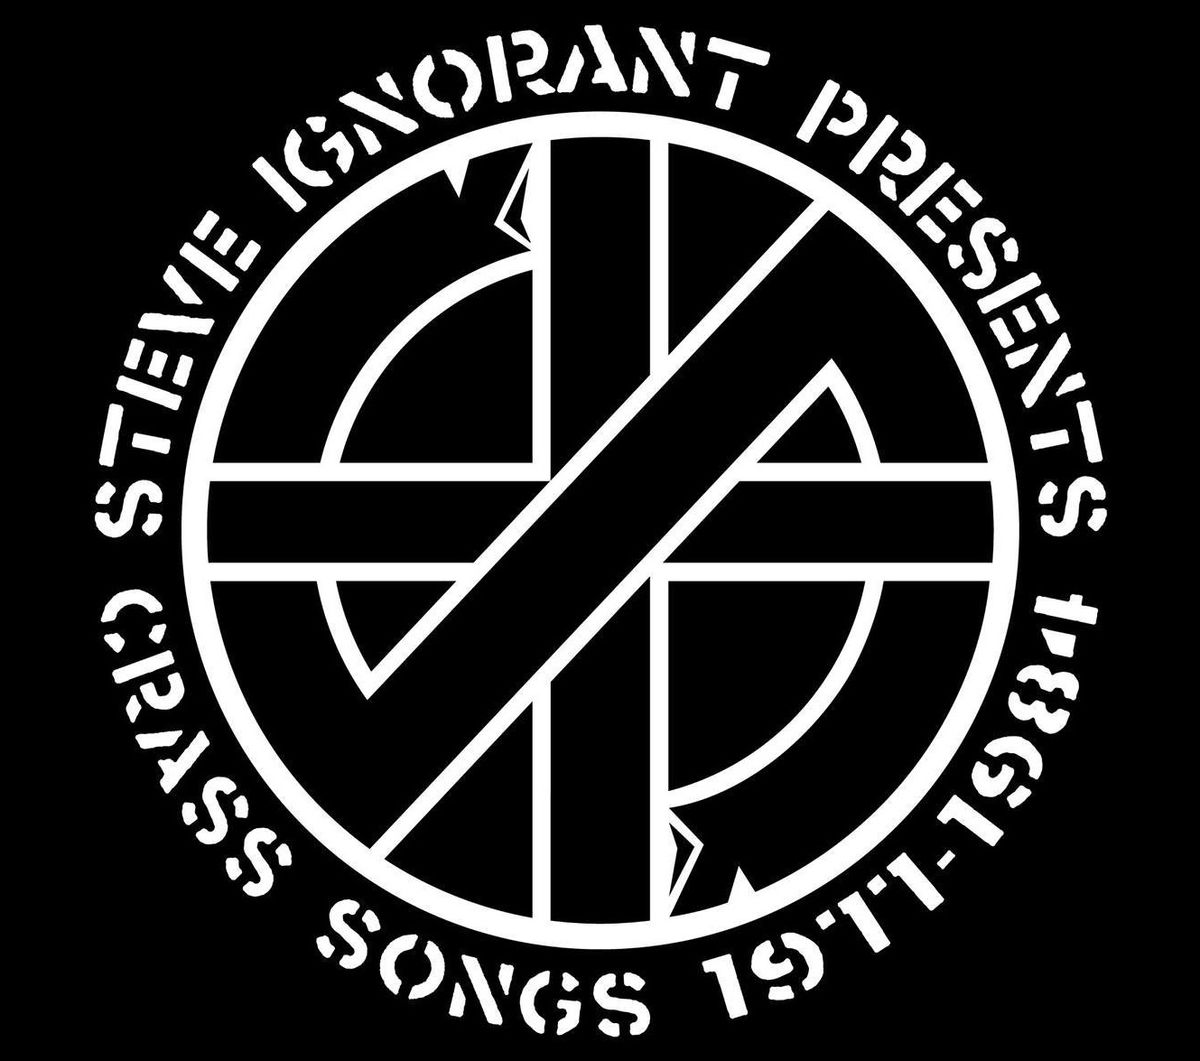 Steve Ignorant presents Crass songs - Punk leeft godverdomme